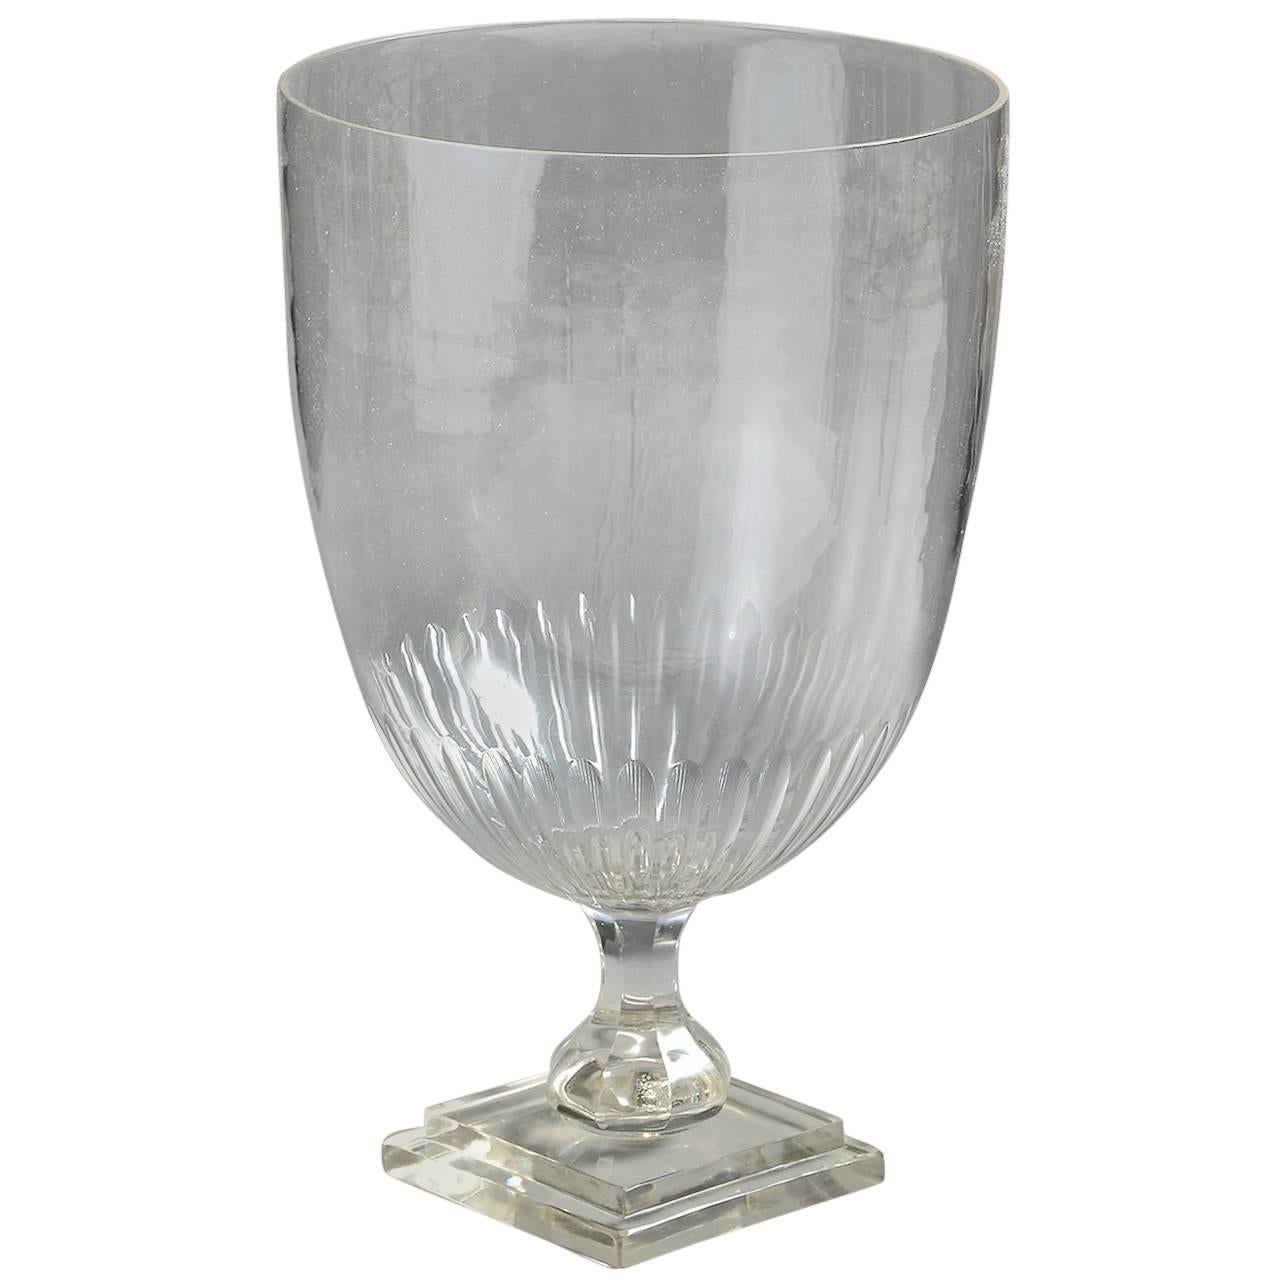 Large Cut-Glass Vase